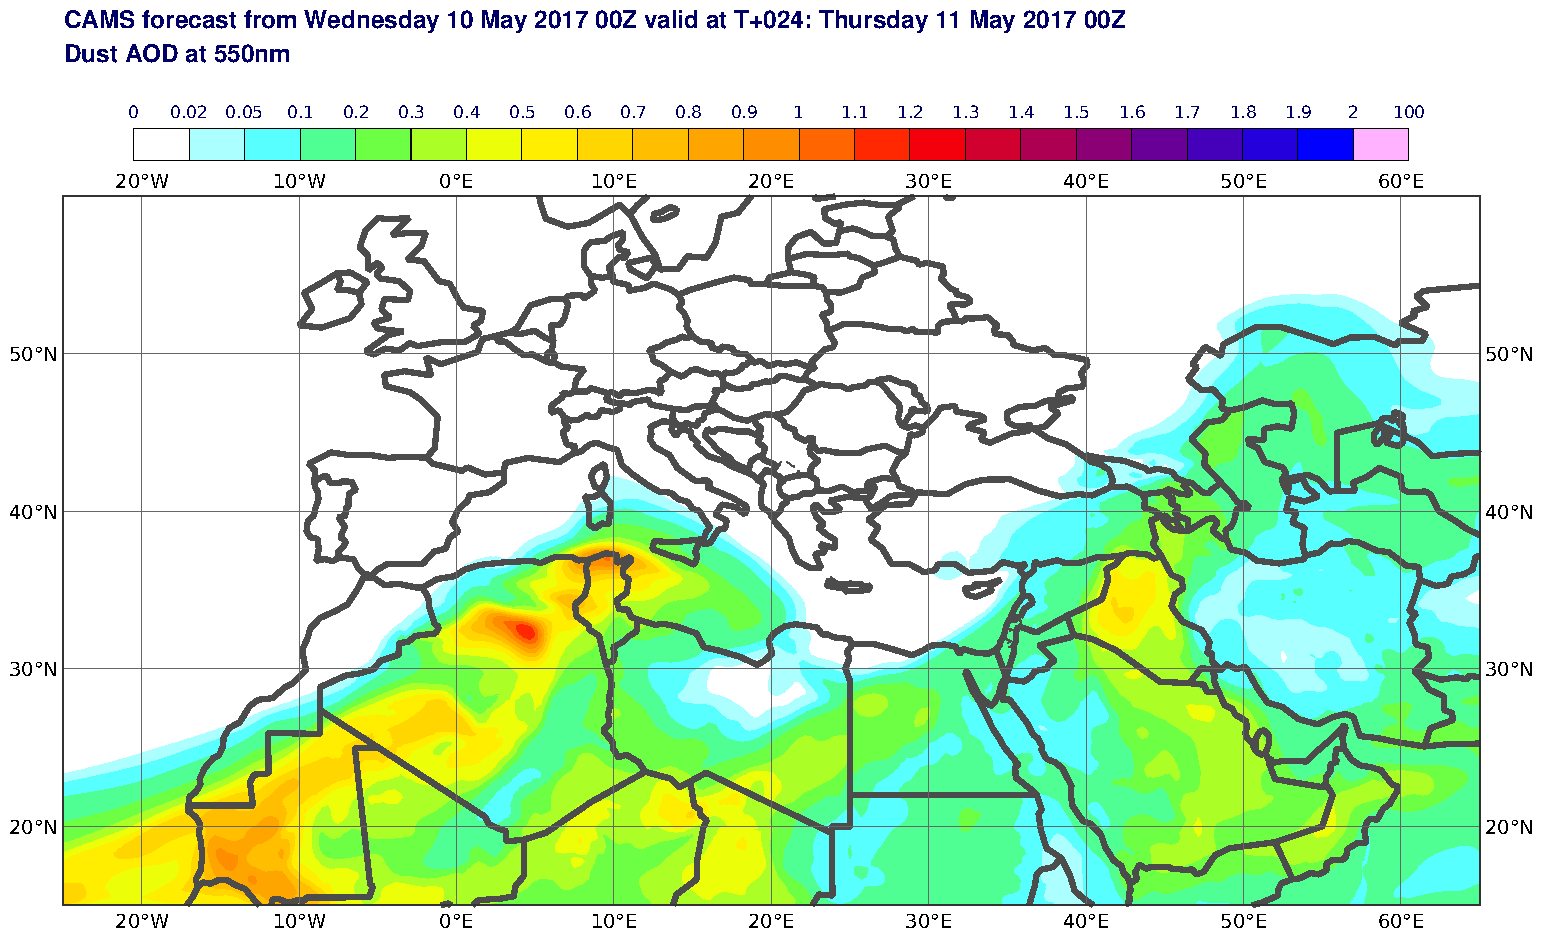 Dust AOD at 550nm valid at T24 - 2017-05-11 00:00